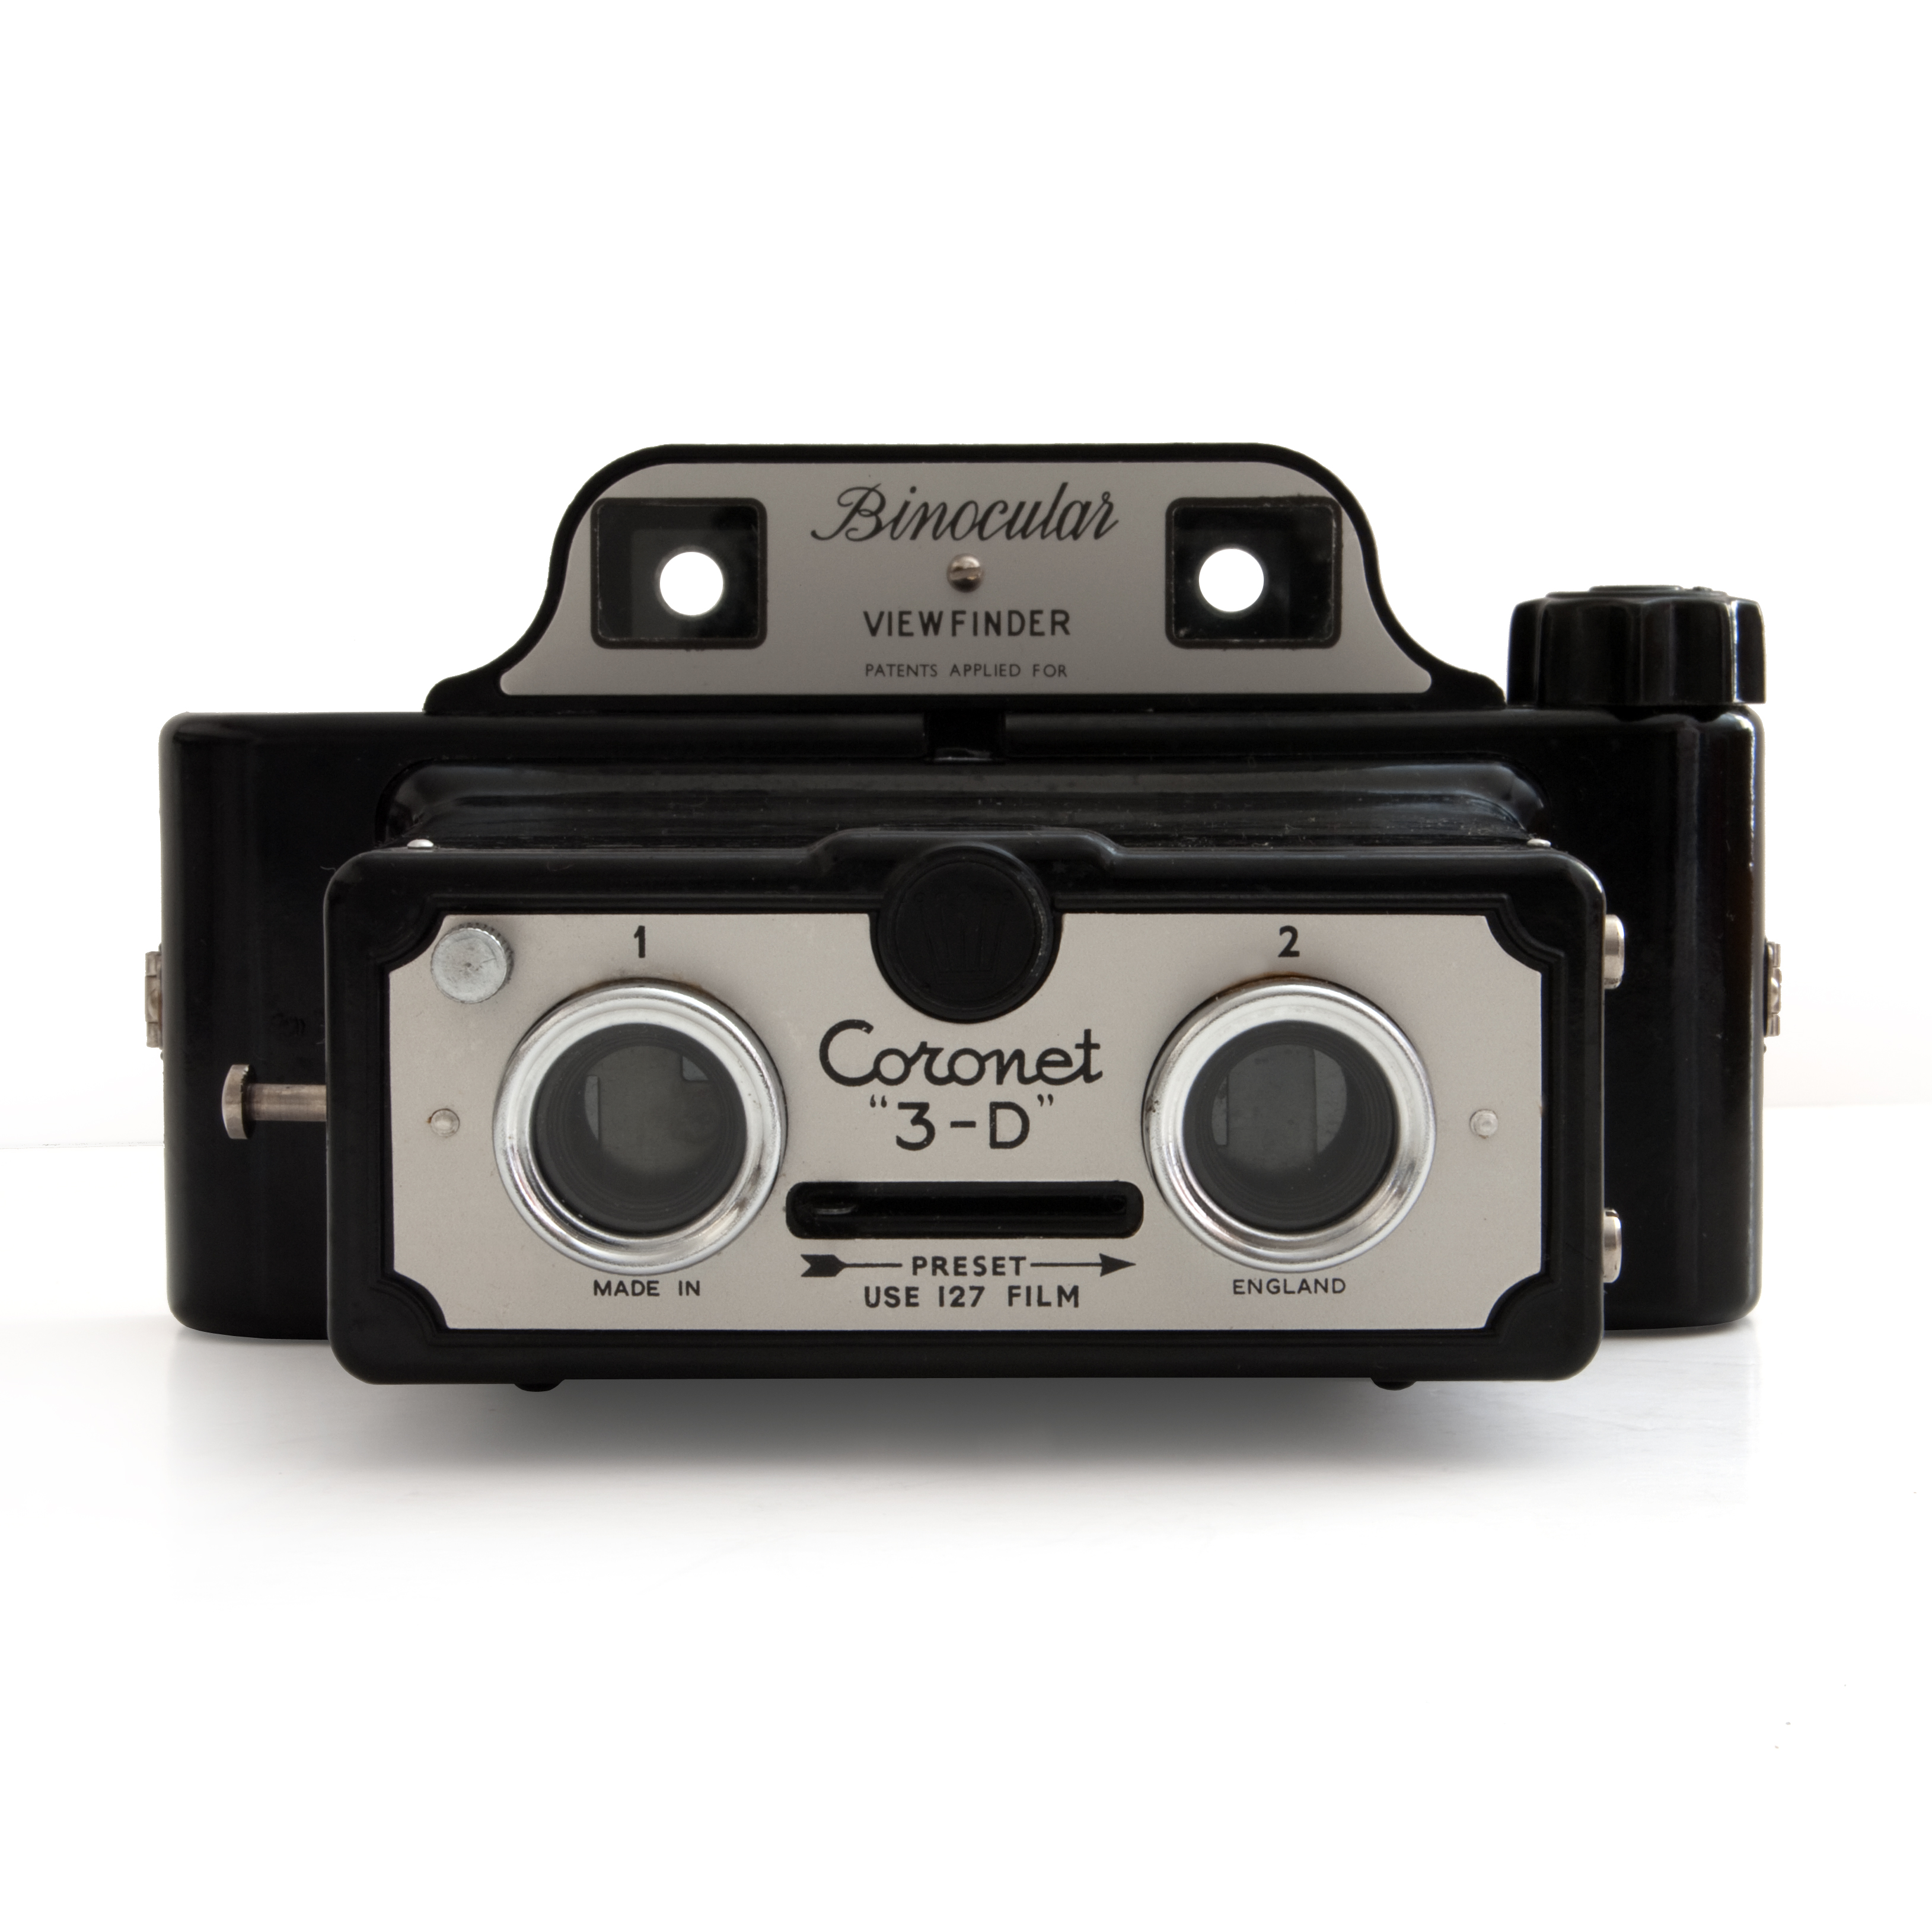 Coronet 3-D camera - front